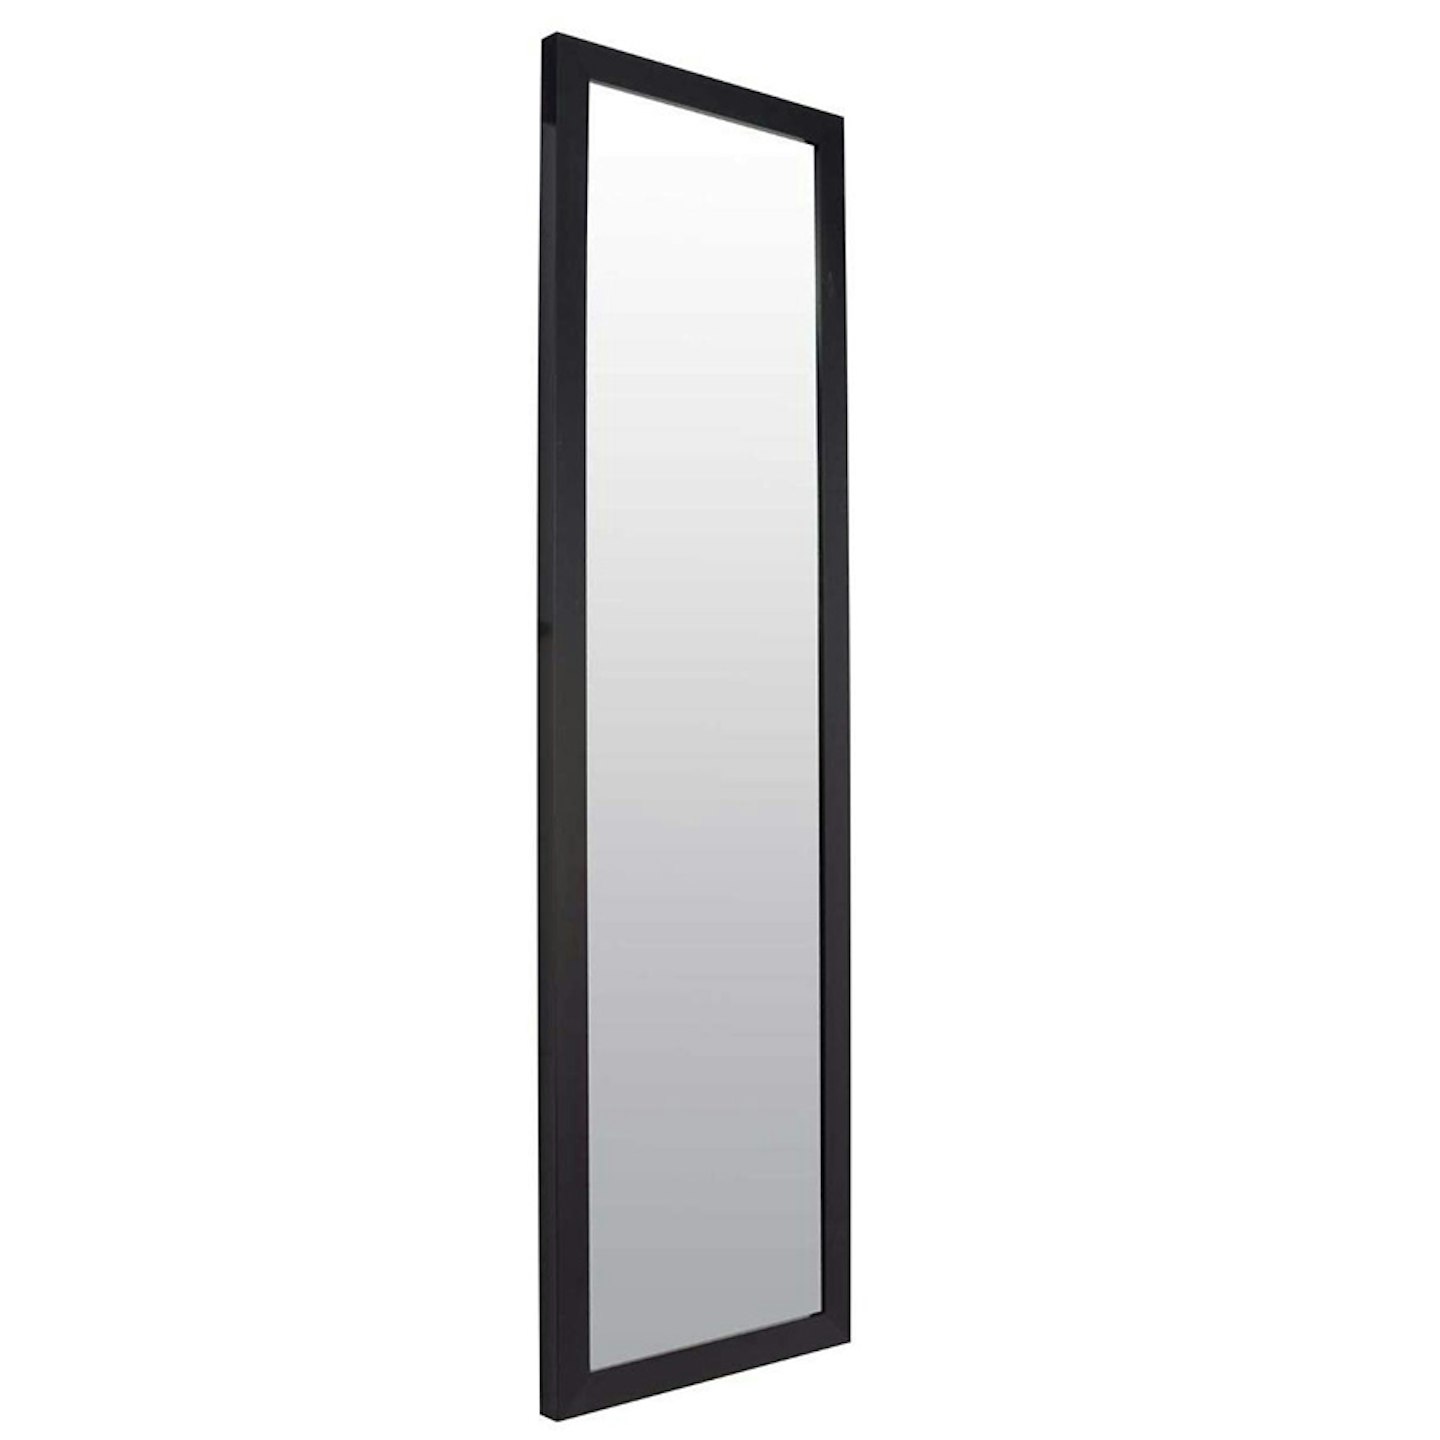 Mirror Large Black Contemporary wall mirror